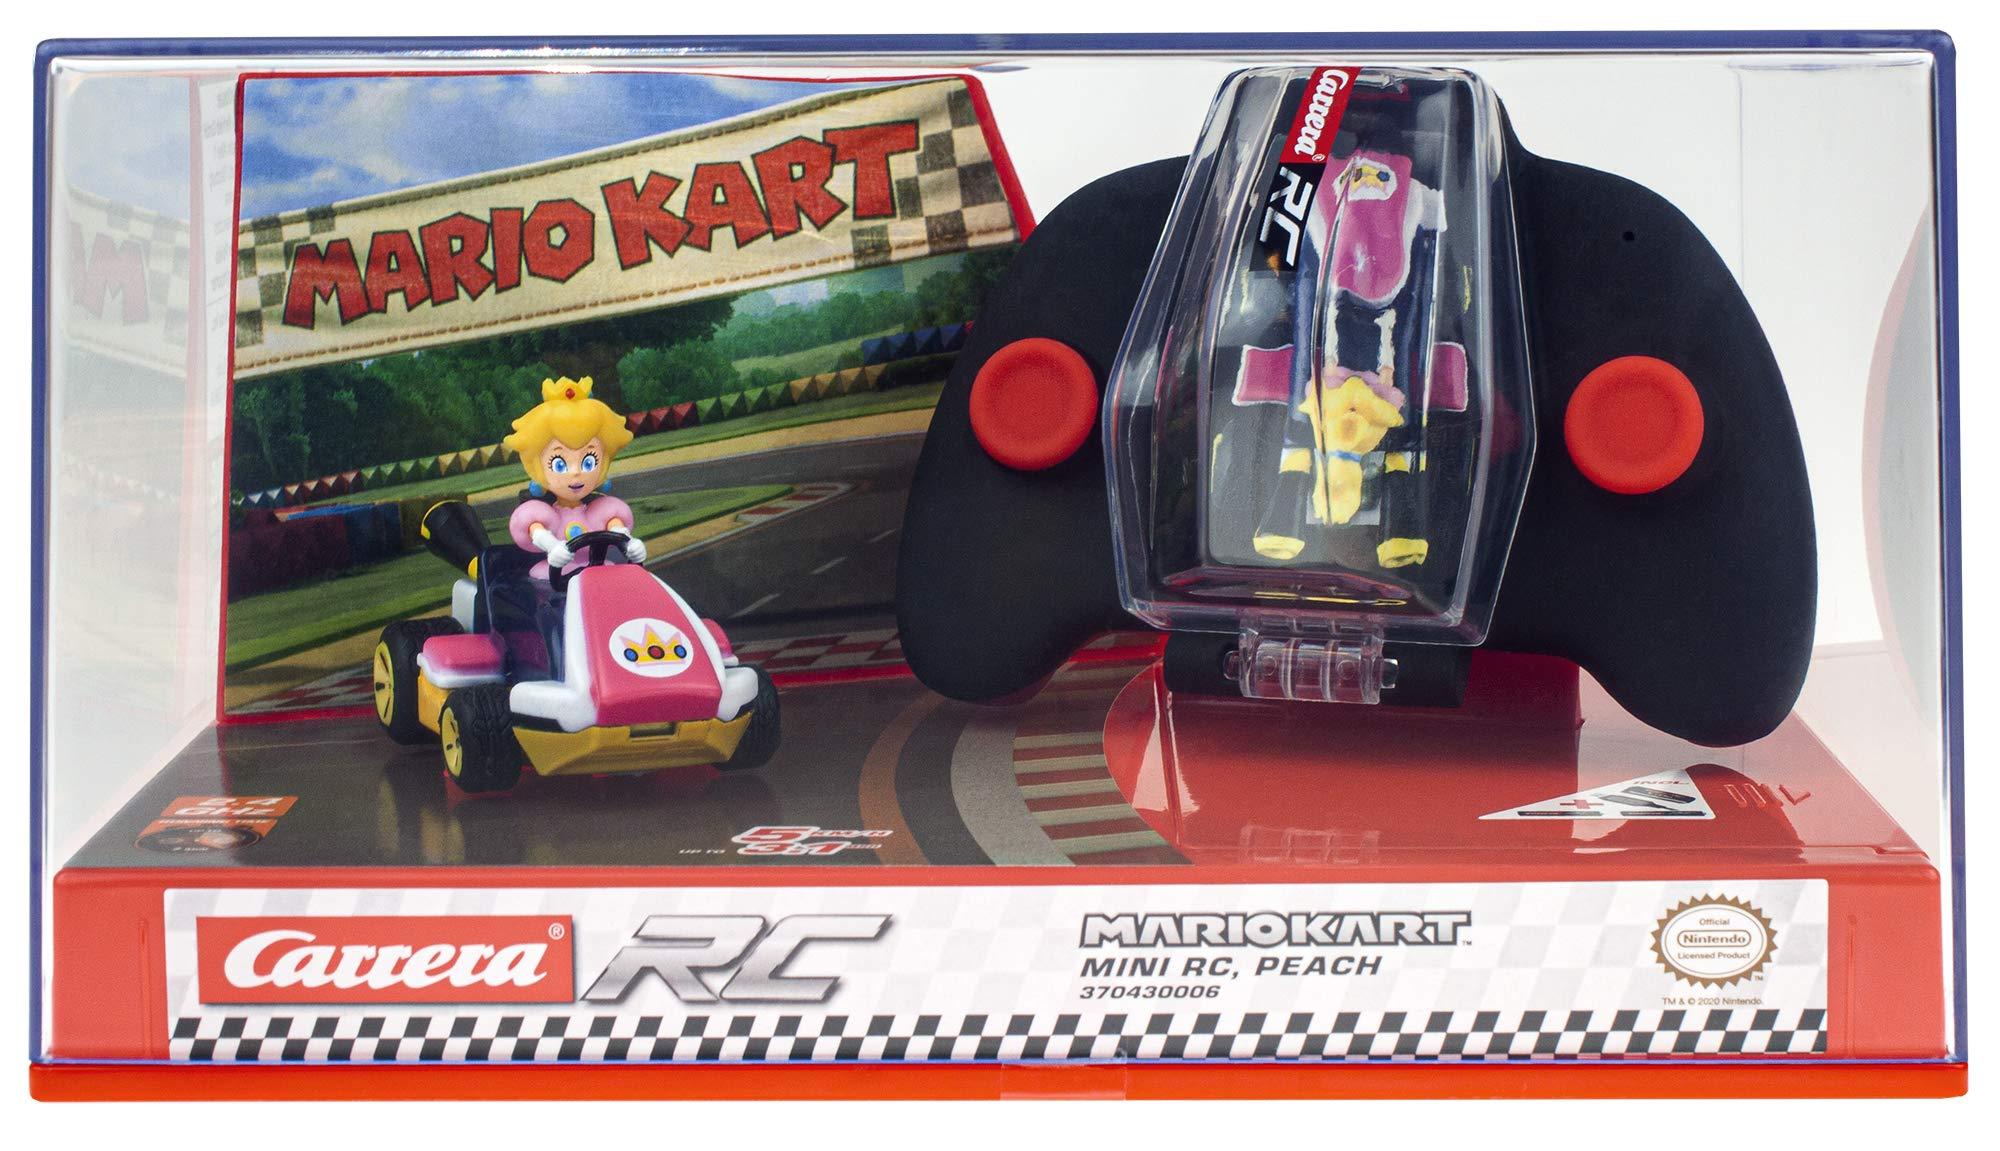 Carrera Mario Kart Mini Rc:  The Exciting World of Carrera Mario Kart Mini RC Racing.